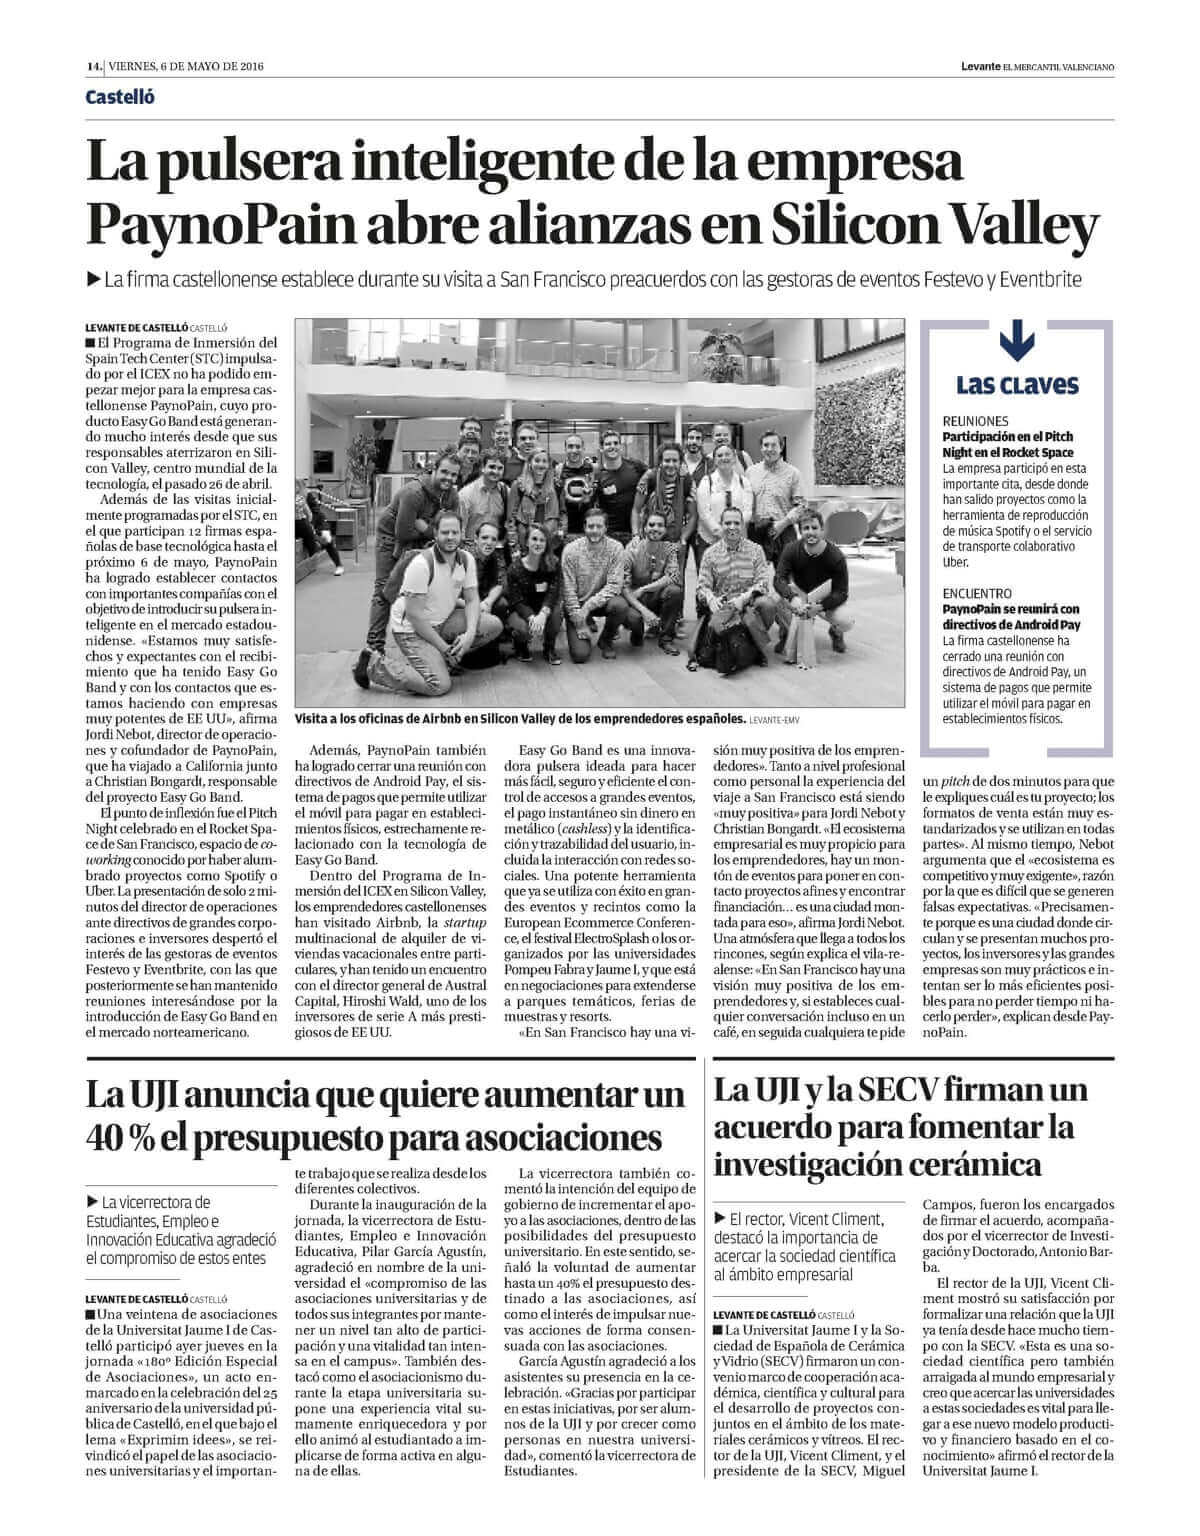 PaynoPain abre alianzas en Silicon Valley